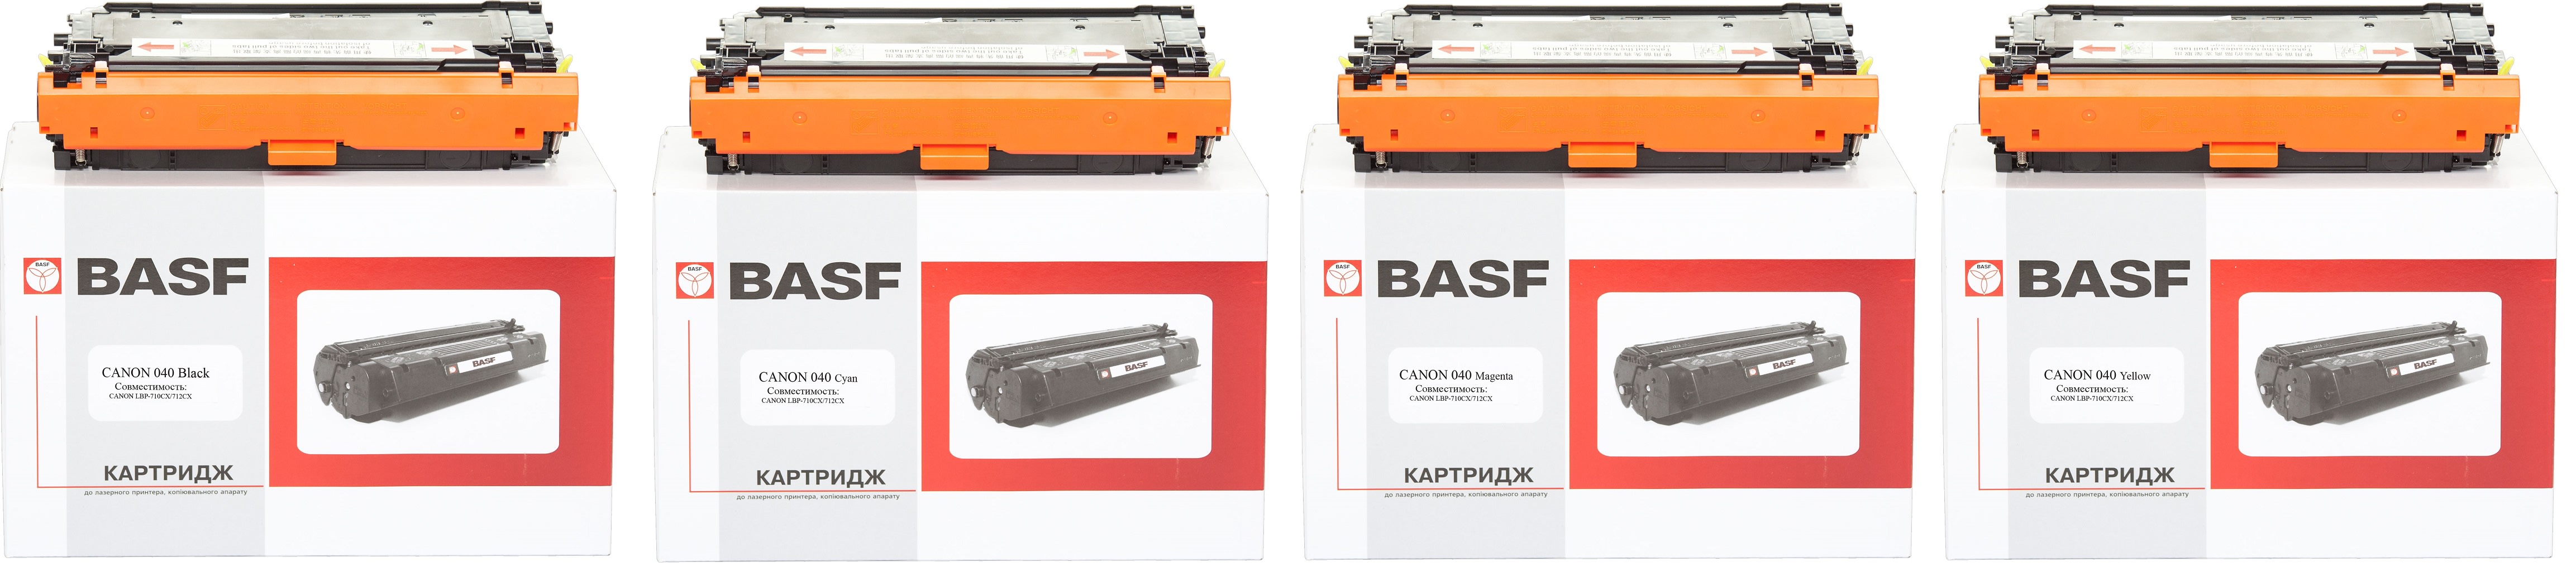 Картриджи BASF-KT-040 для Canon i-Sensys LBP-710cx Купить картриджи.